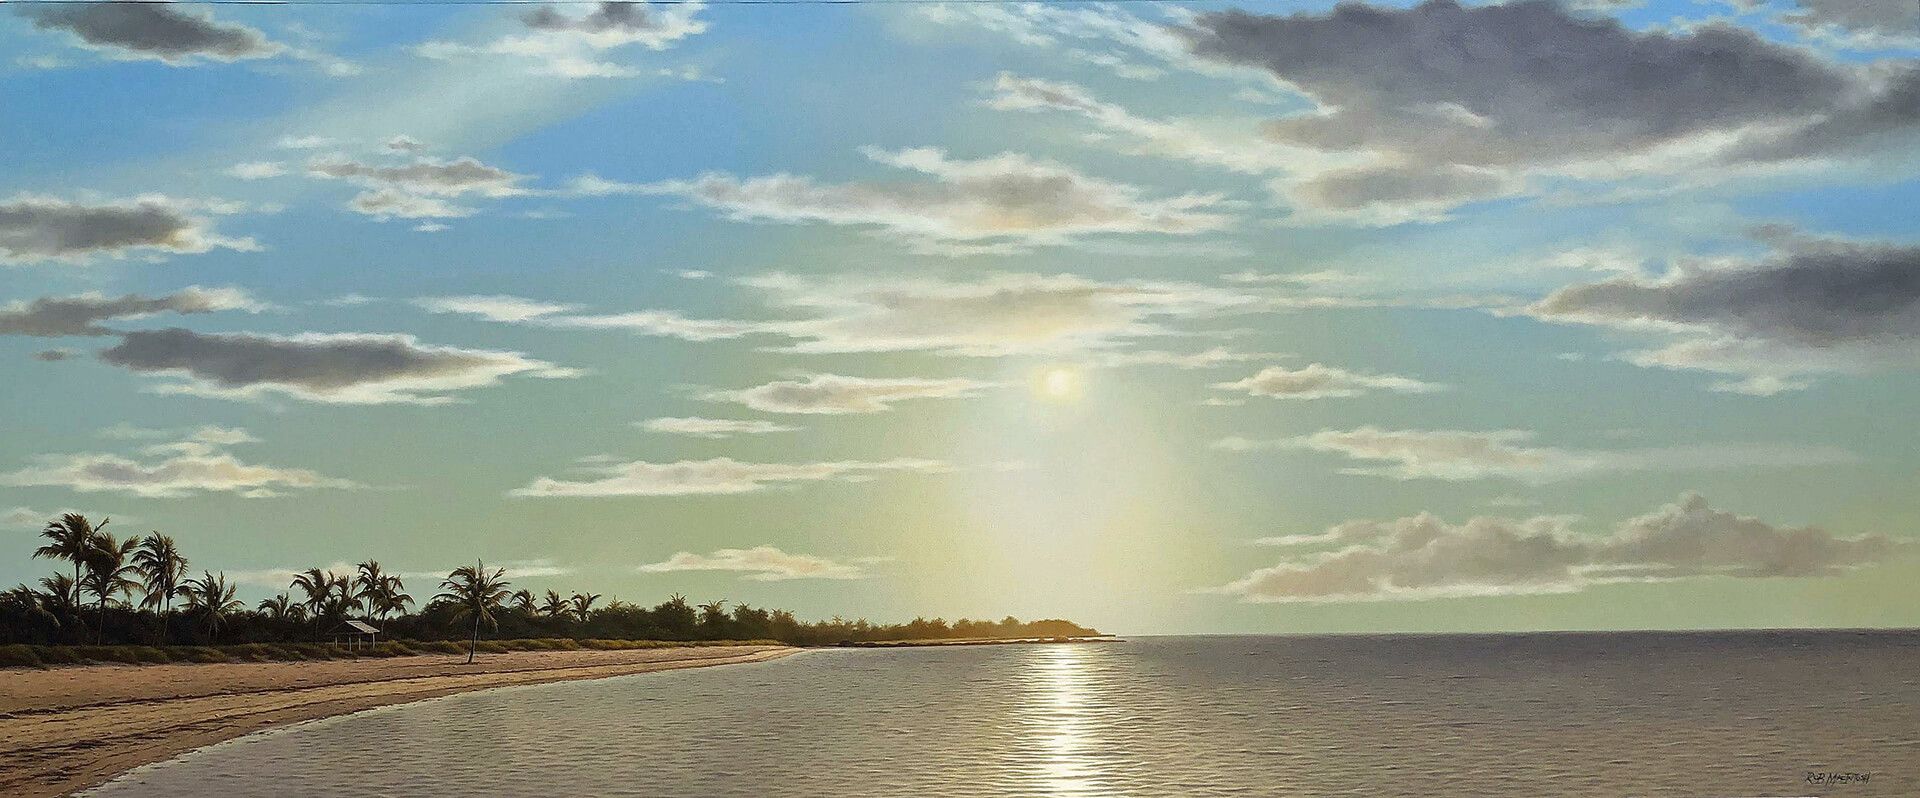 Photorealistic painting of a sunrise over the Florida Keys